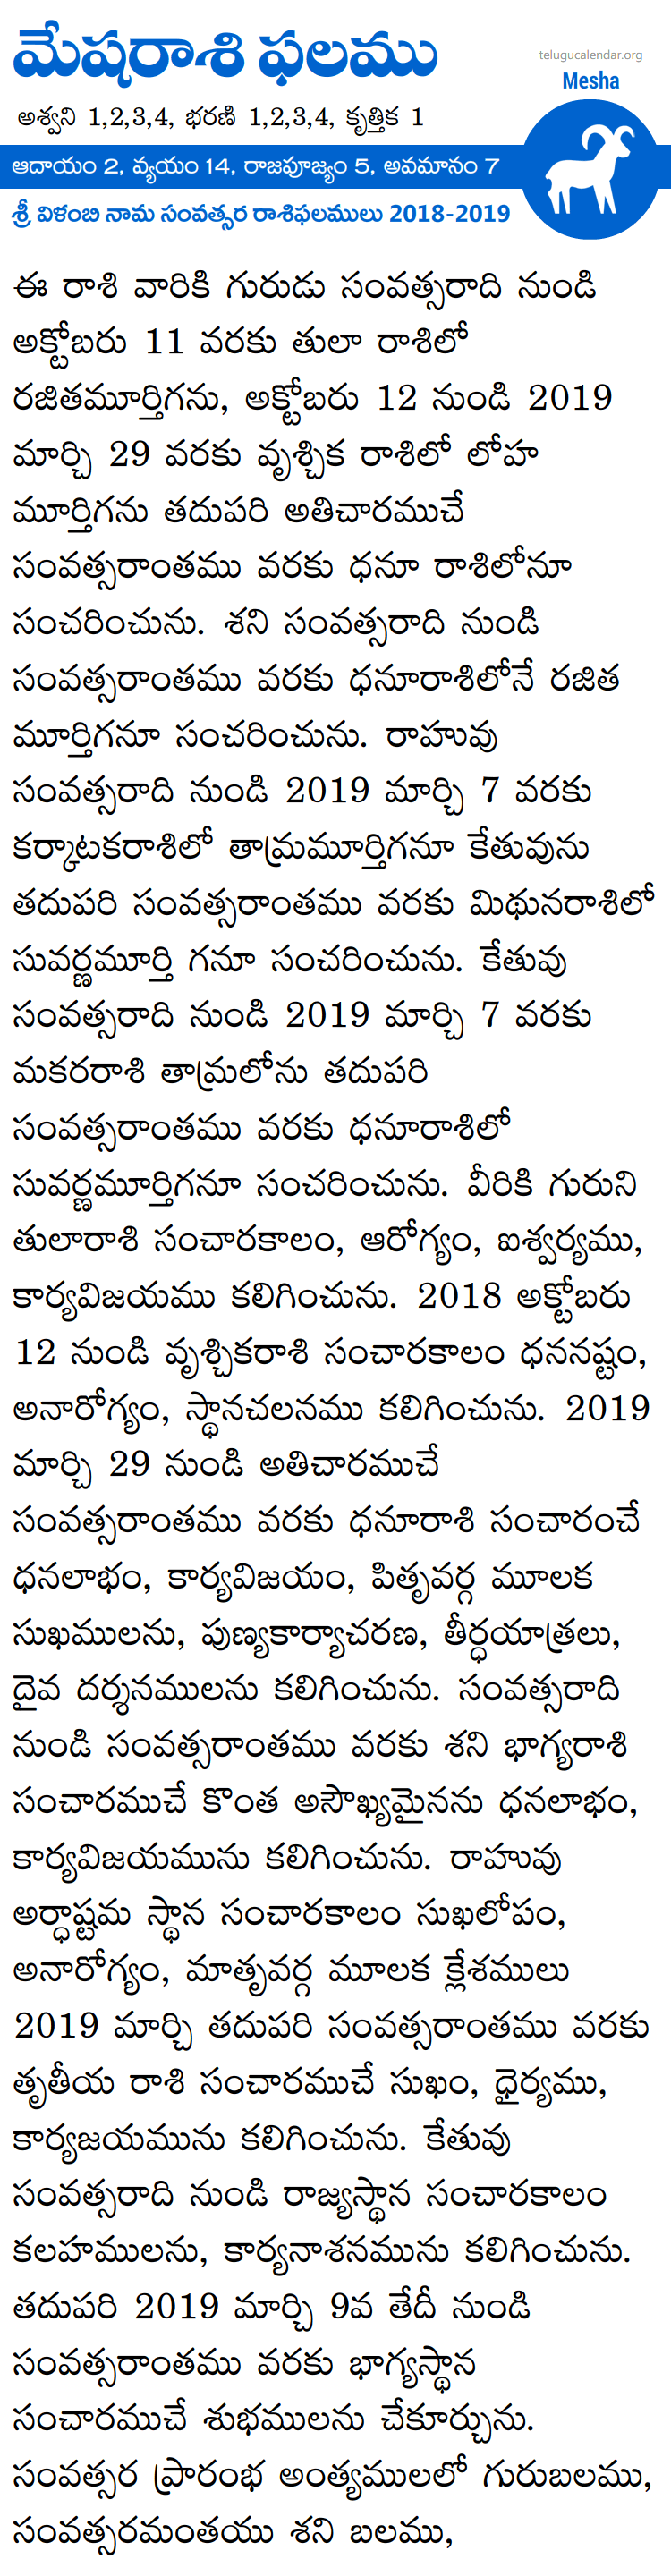 Mesha Rasi Phalalu 2019-2020 Telugu